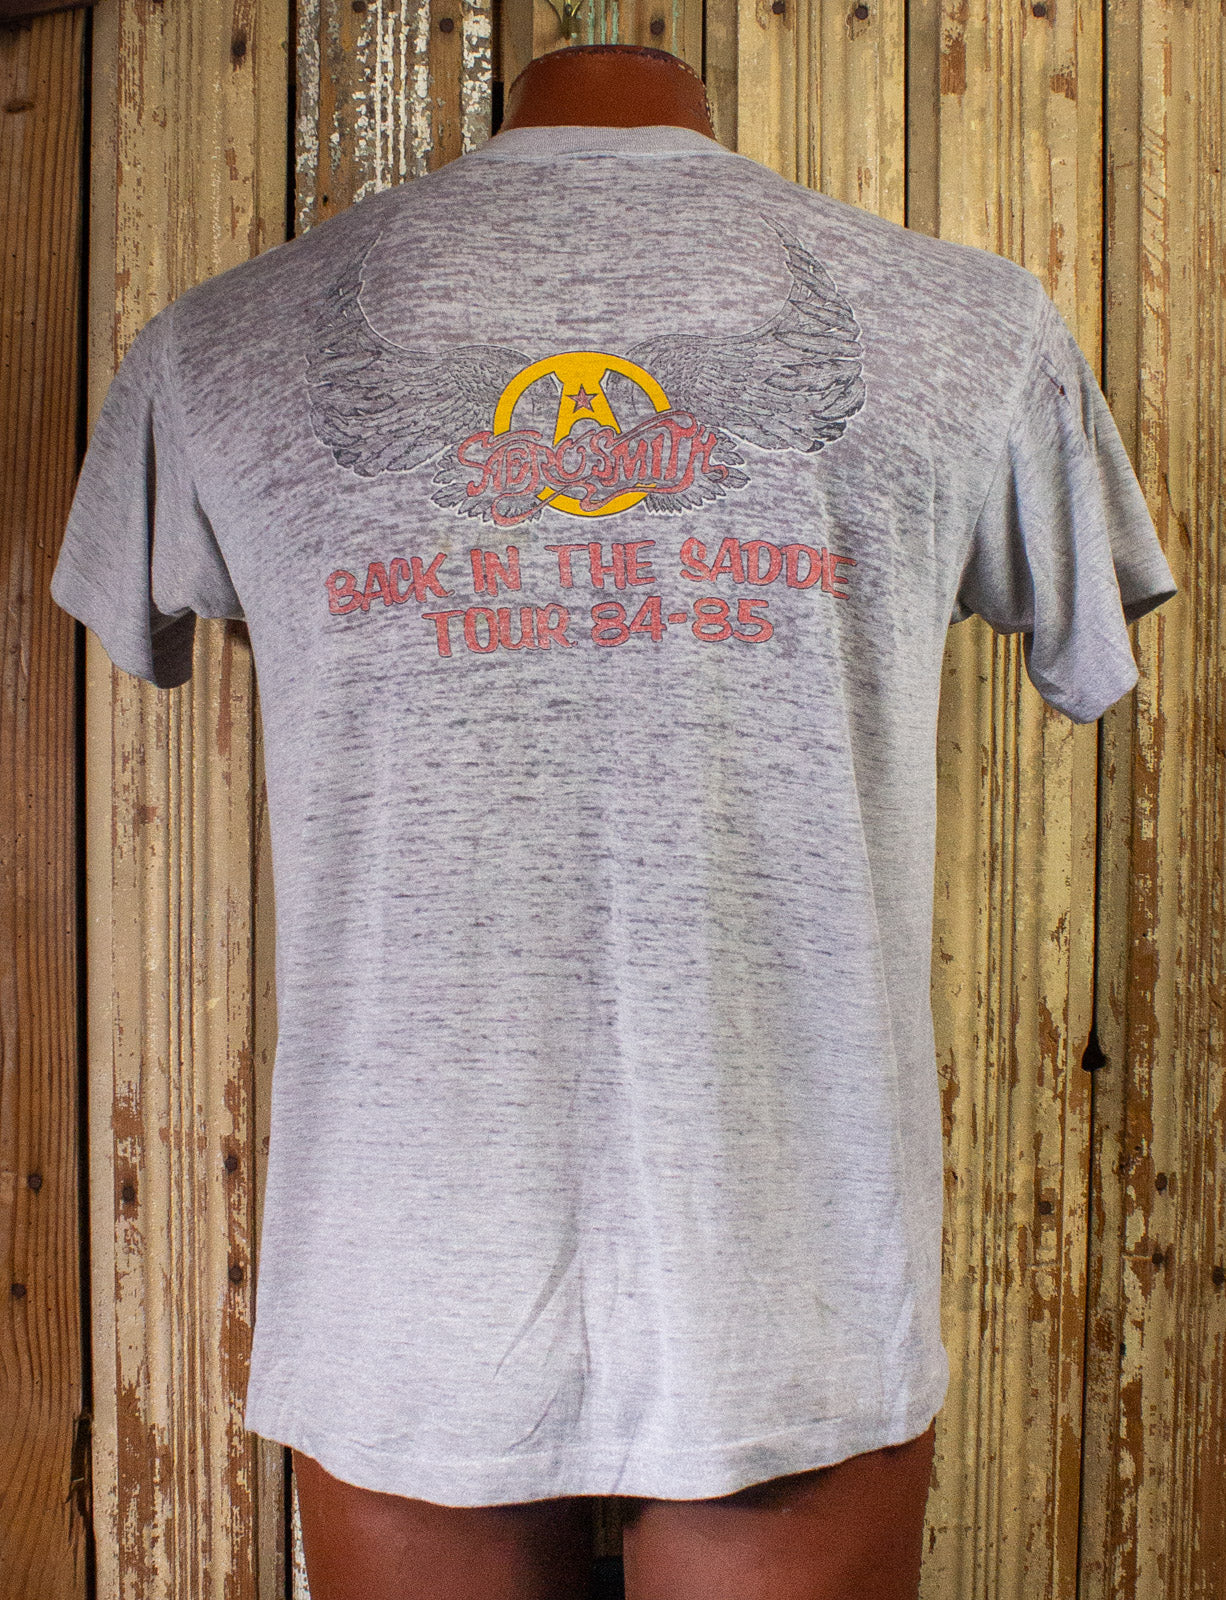 Vintage Aerosmith Back In The Saddle Tour Concert T Shirt 1984-85 Gray Large